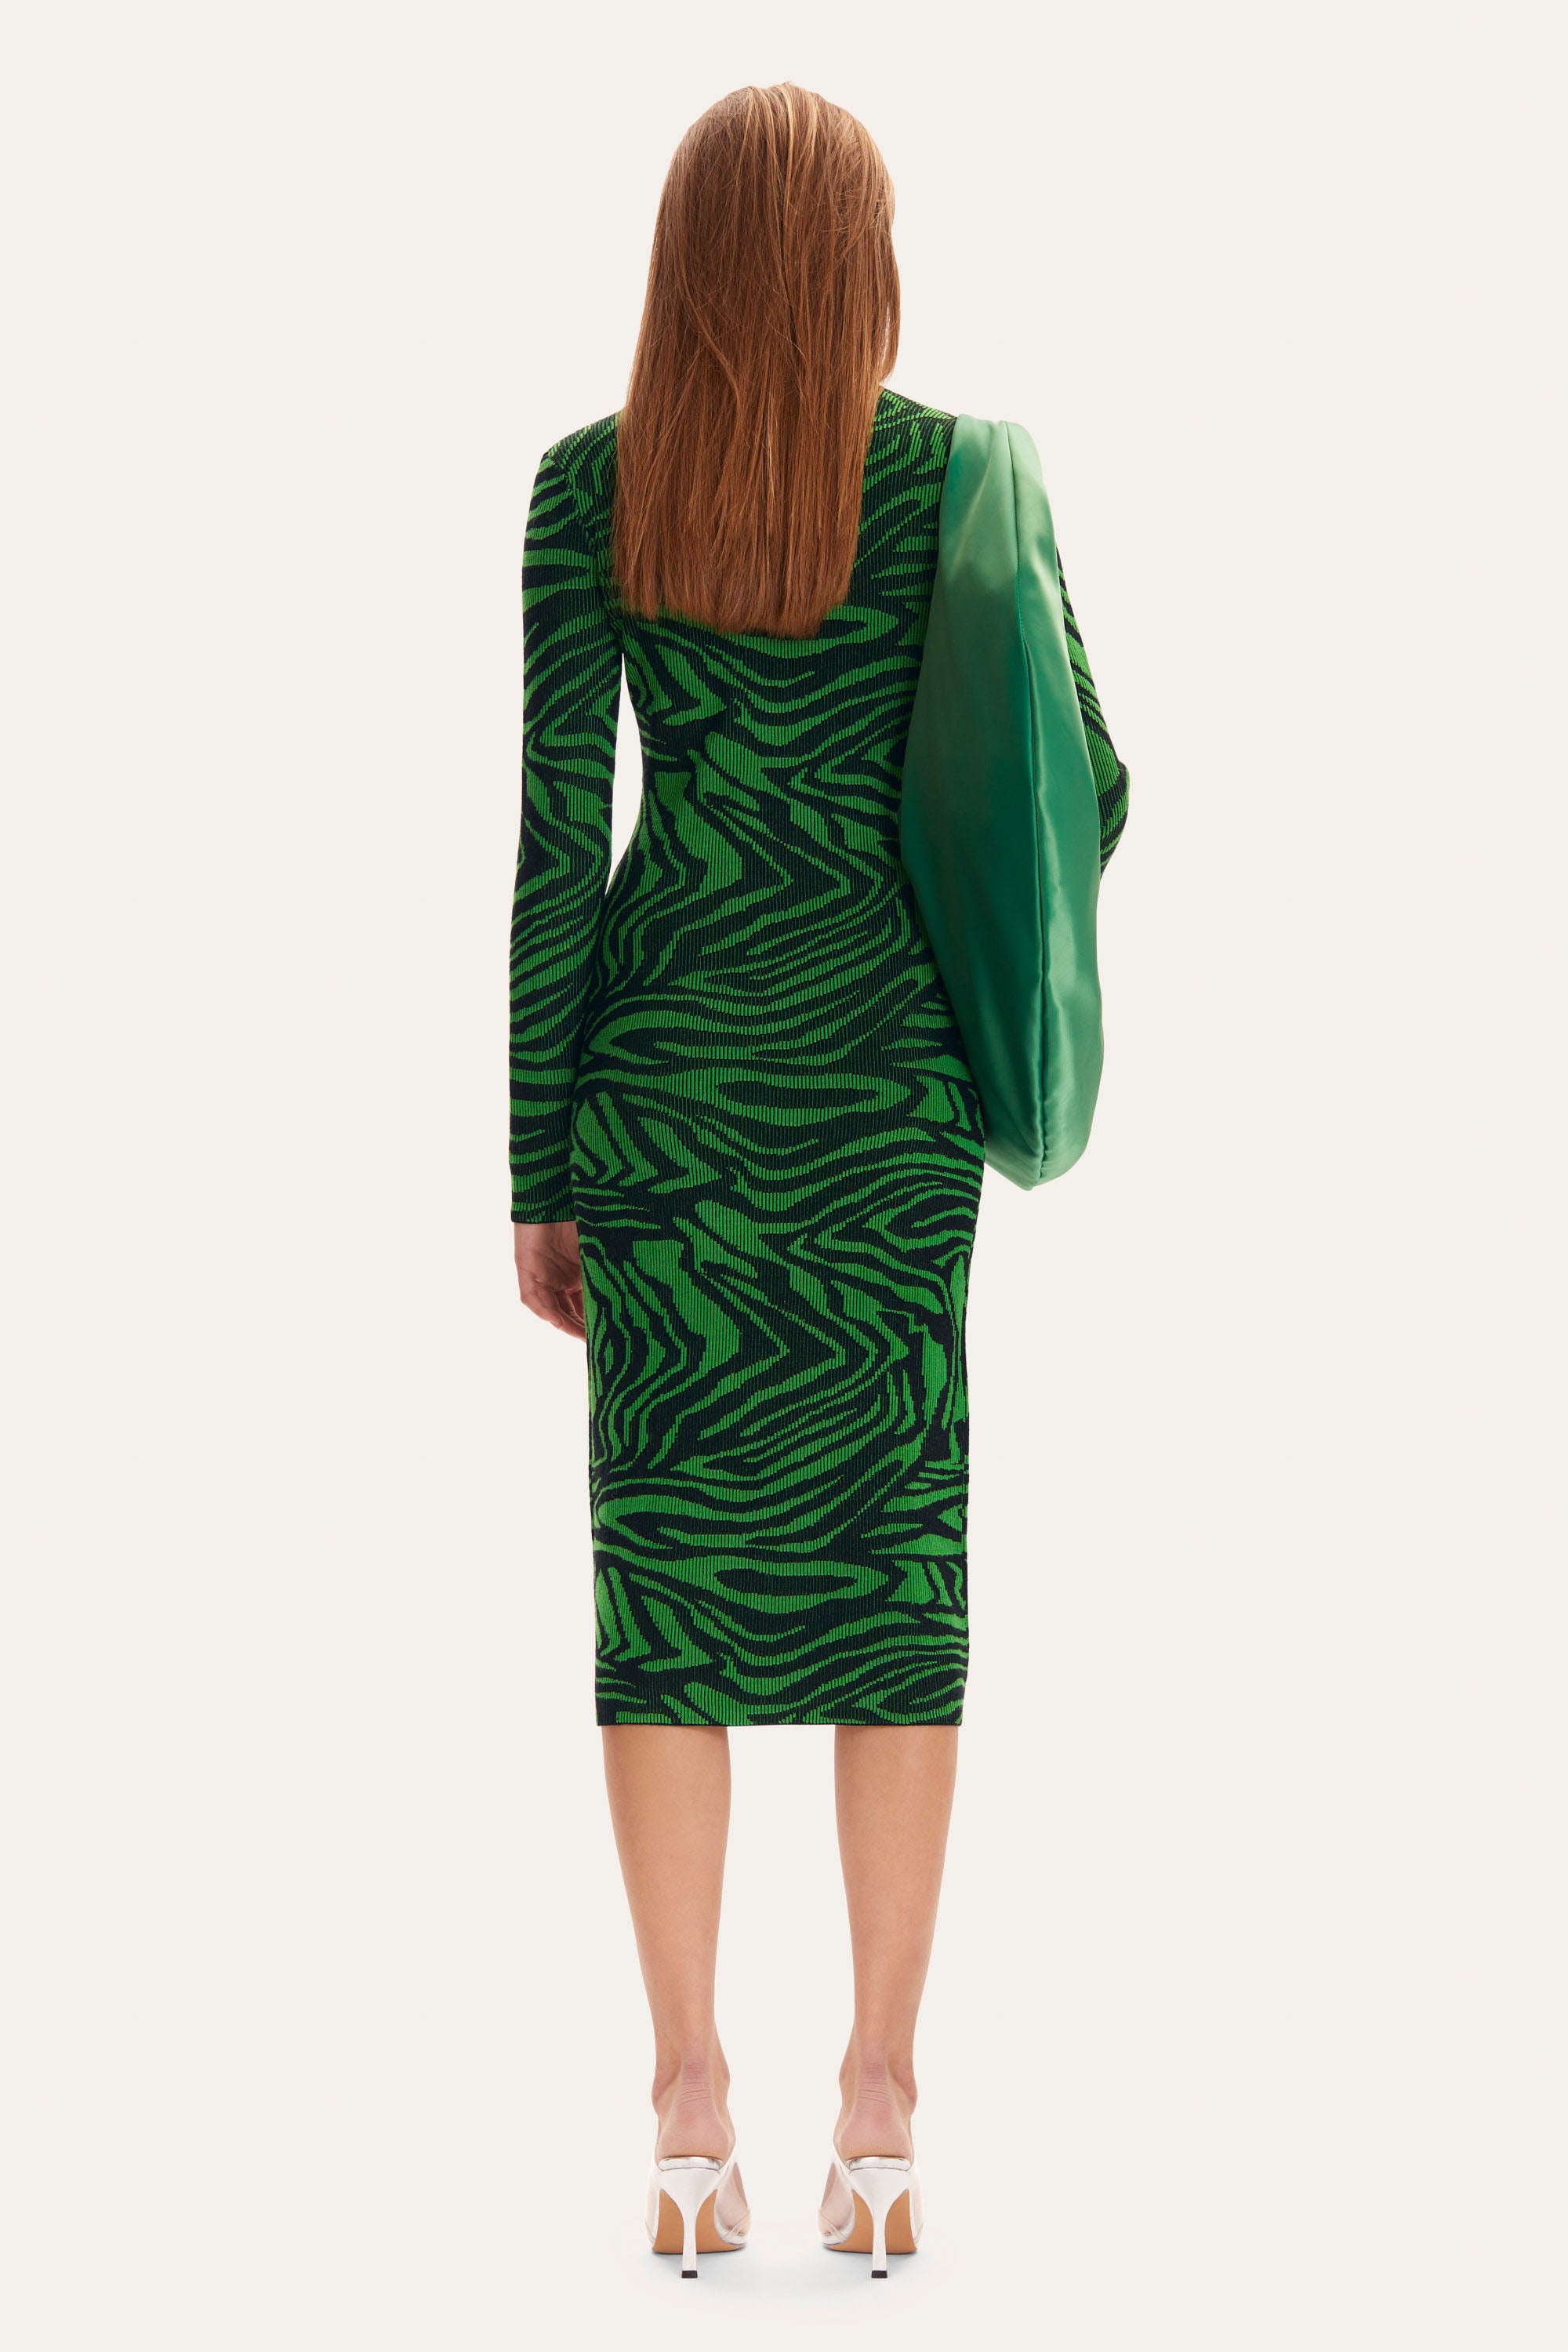 Stine Goya Chiara Knit Dress - Dark Green Comb - White Feather Boutique